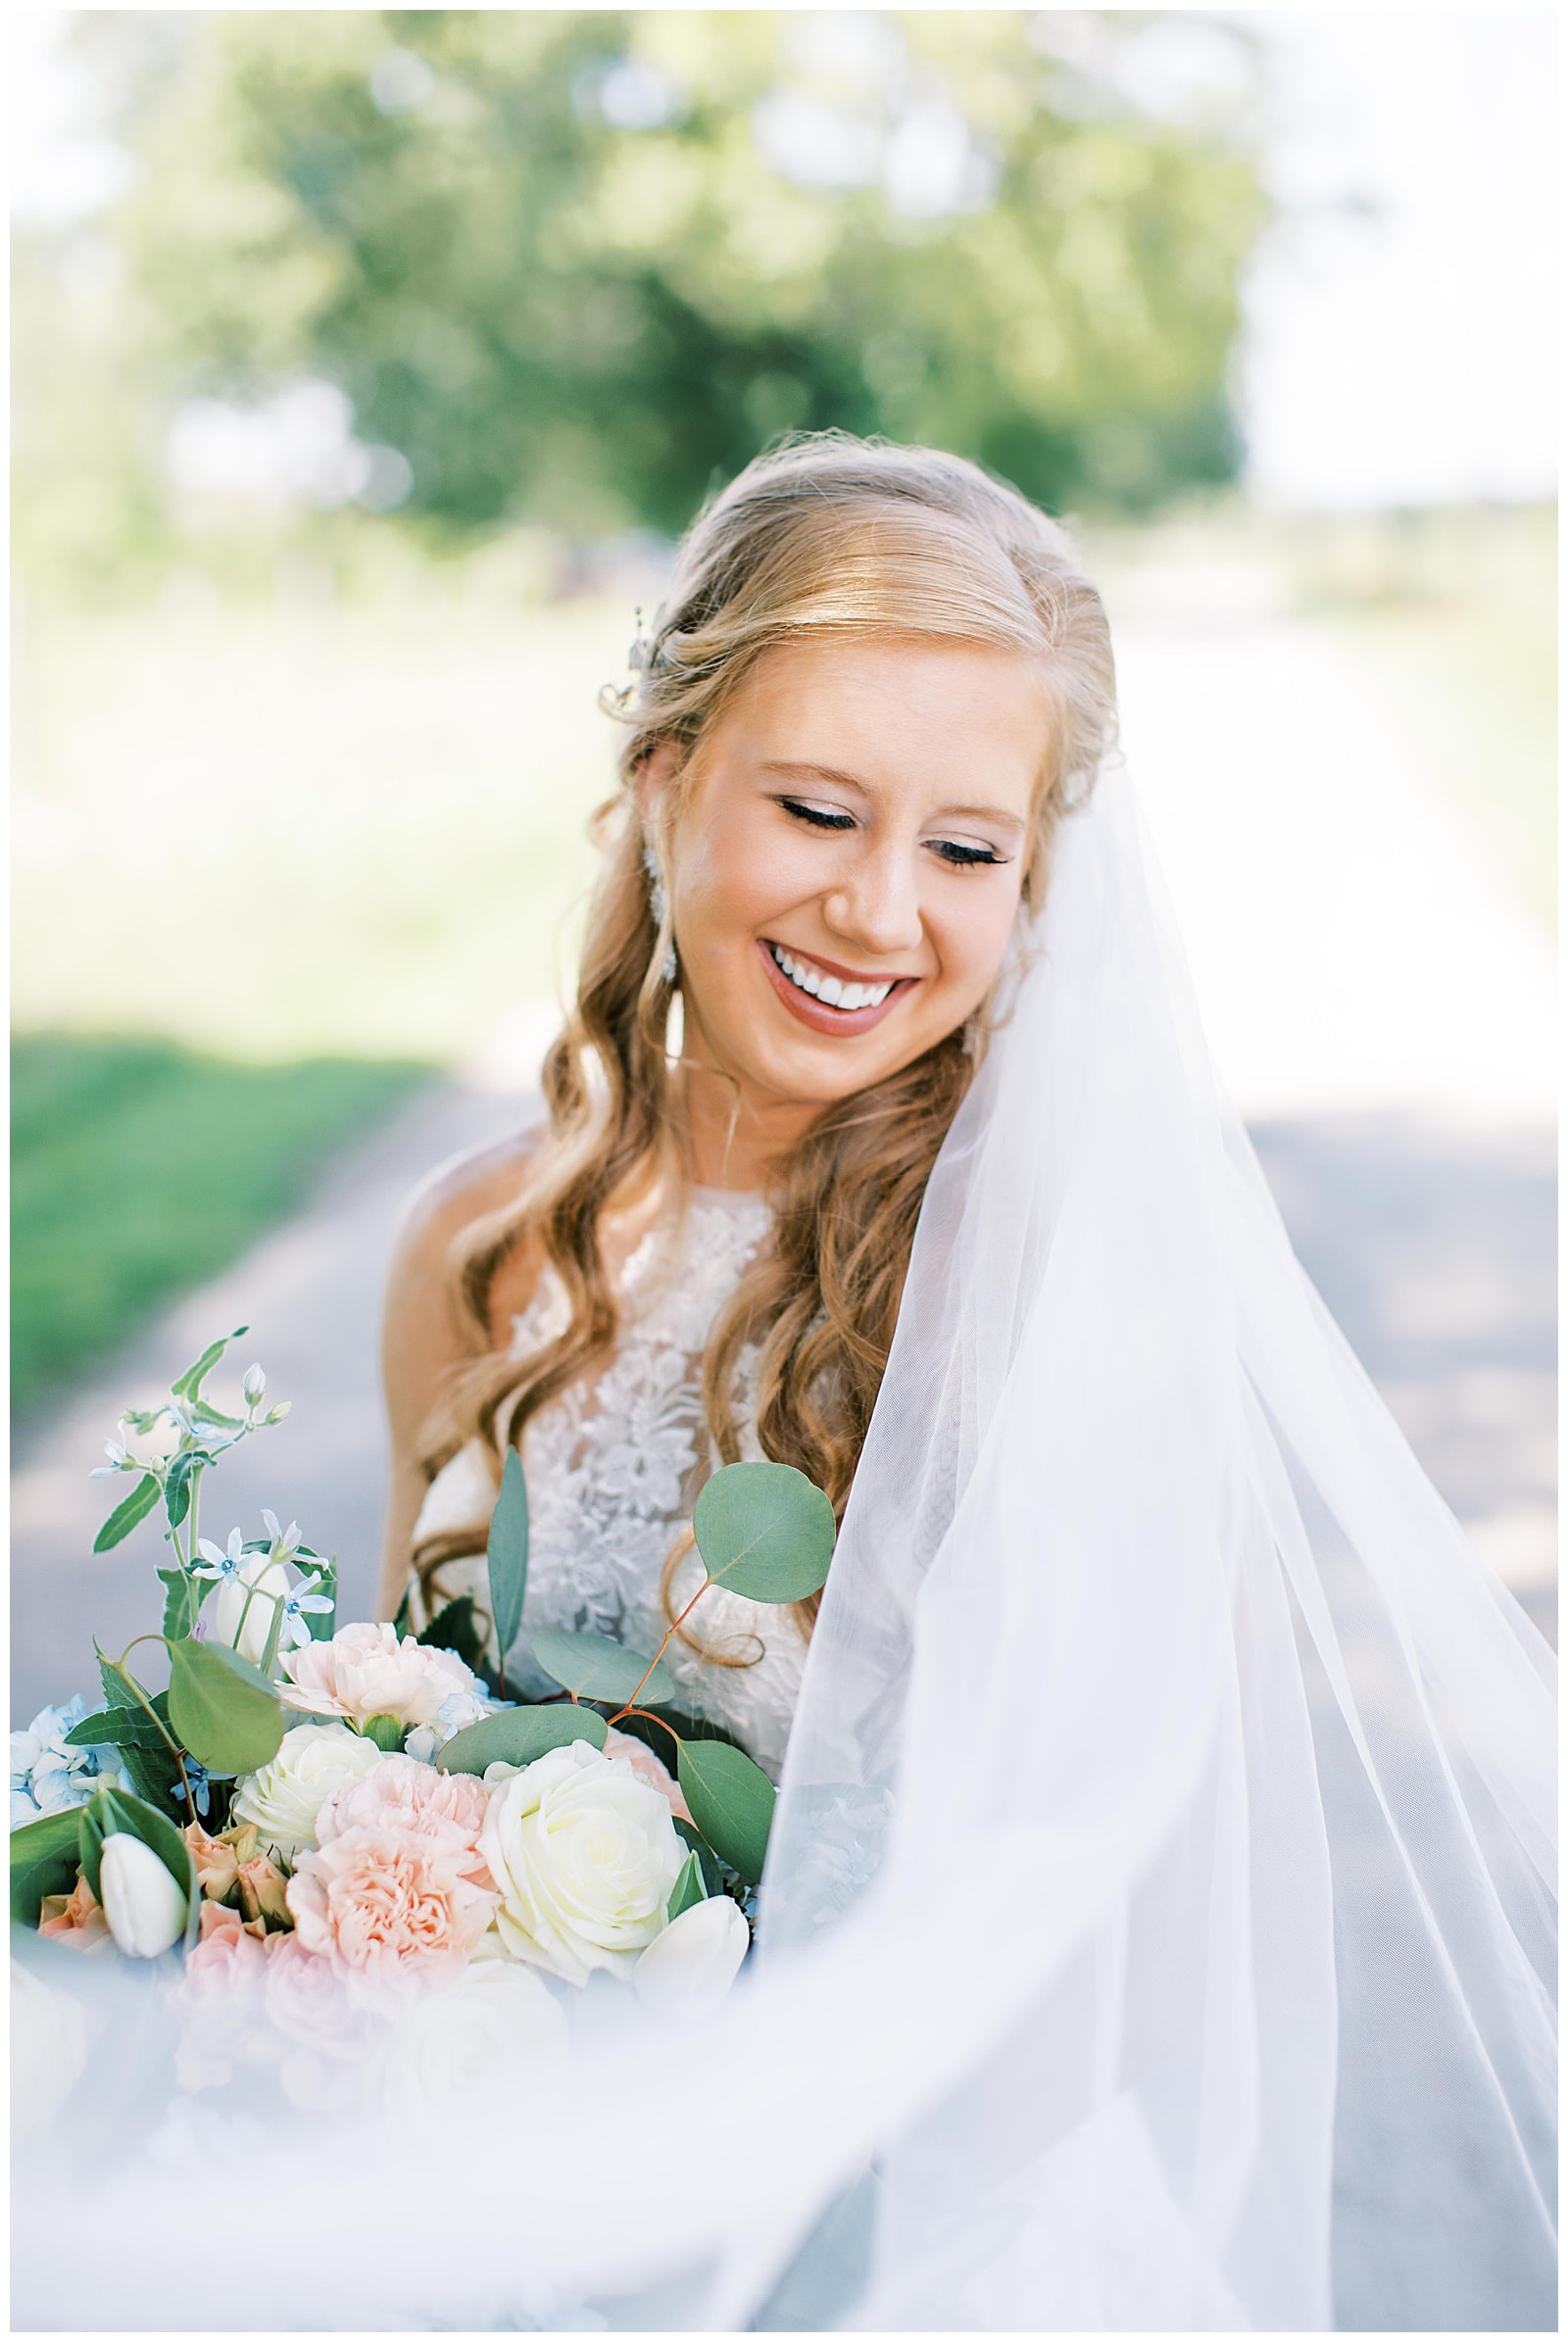 Danielle-Defayette-Photography-Farm-at-Bentley-Fields-Wedding-2020_0018.jpg